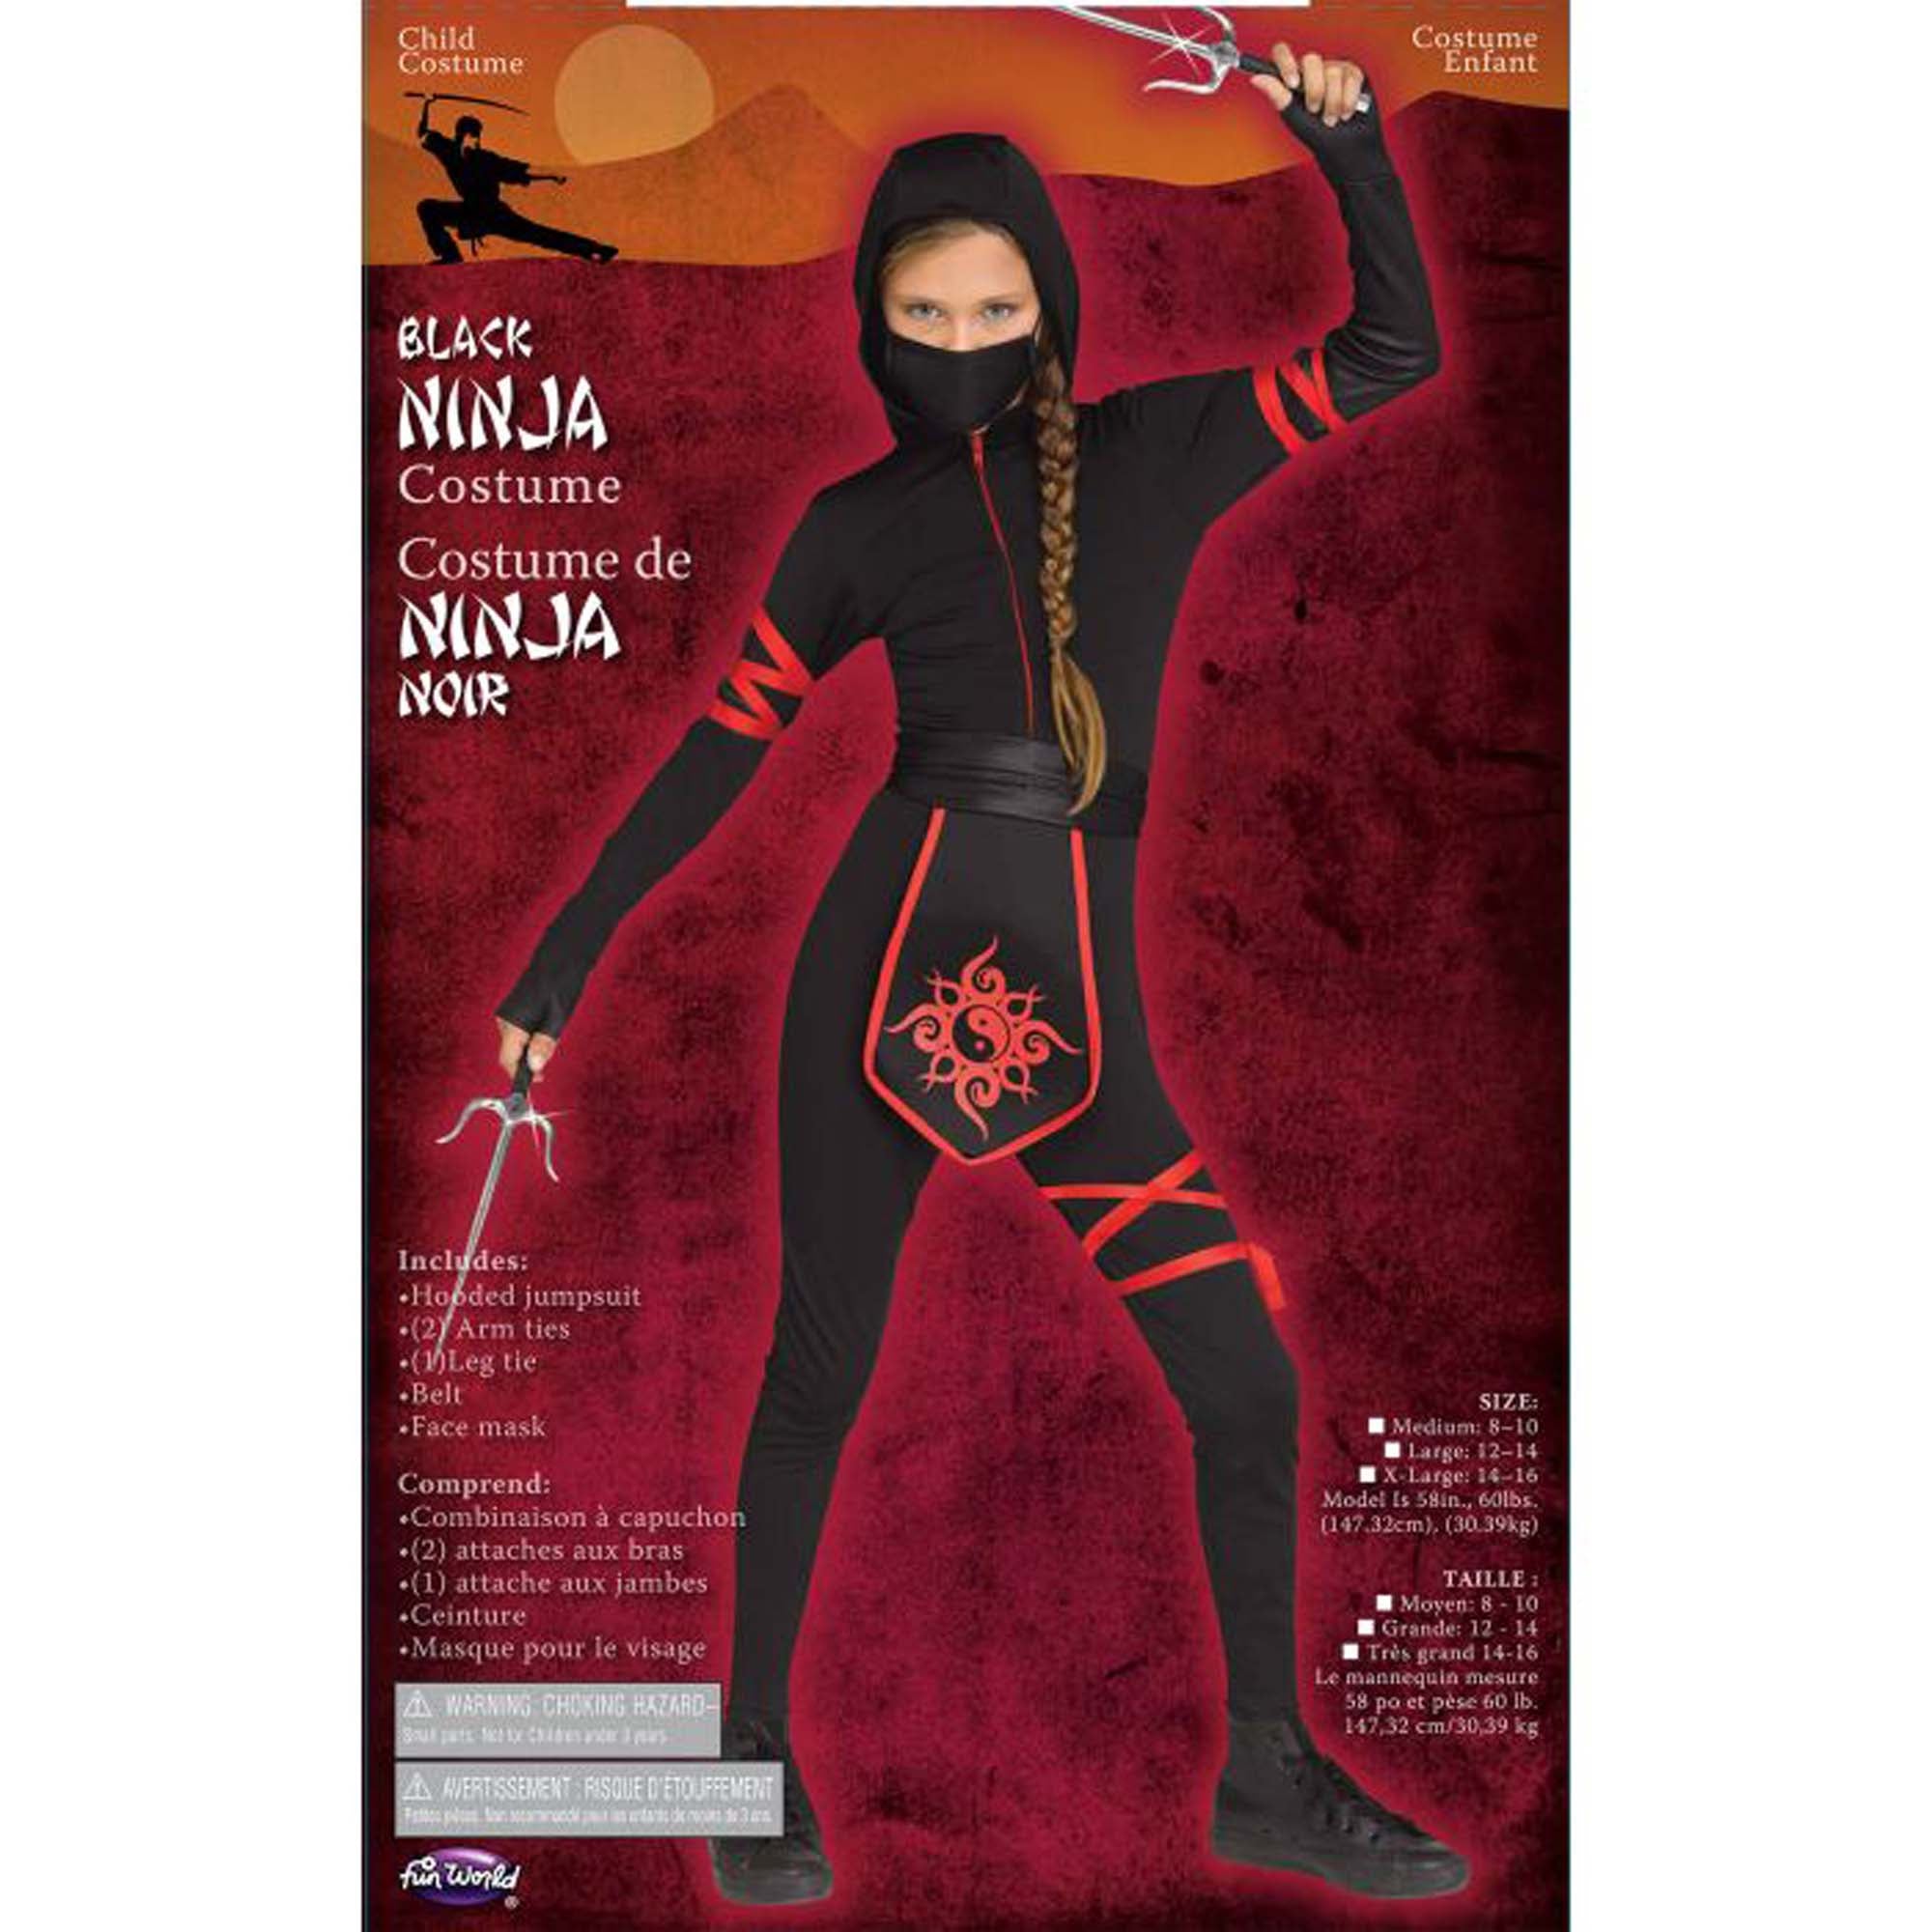 Bandana ninja - Votre magasin de costumes en ligne